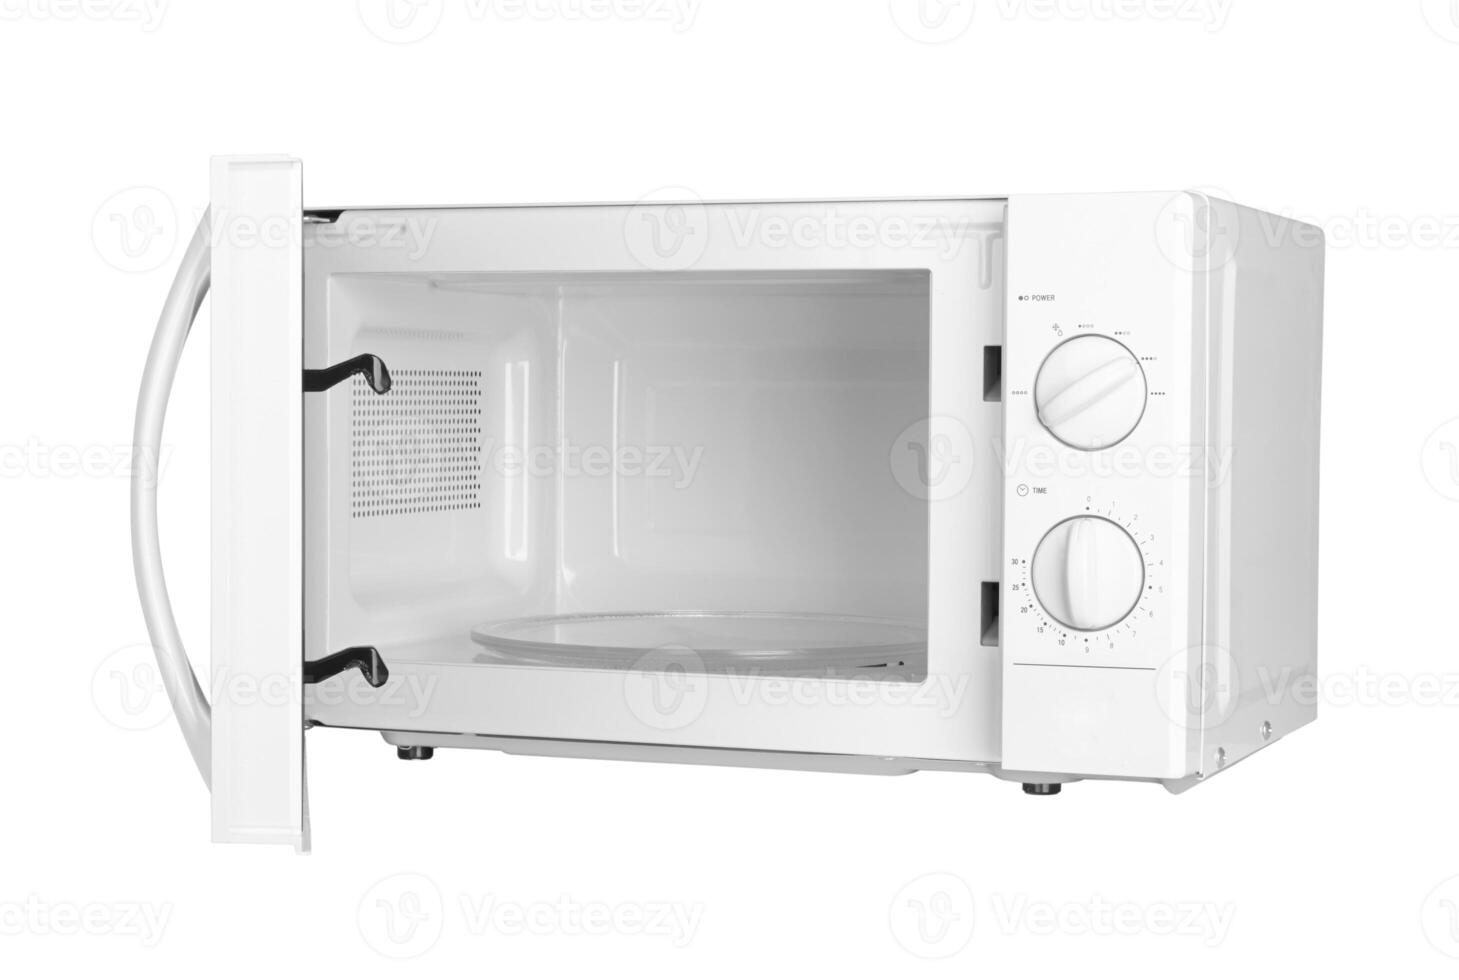 Open magnetronoven oven foto